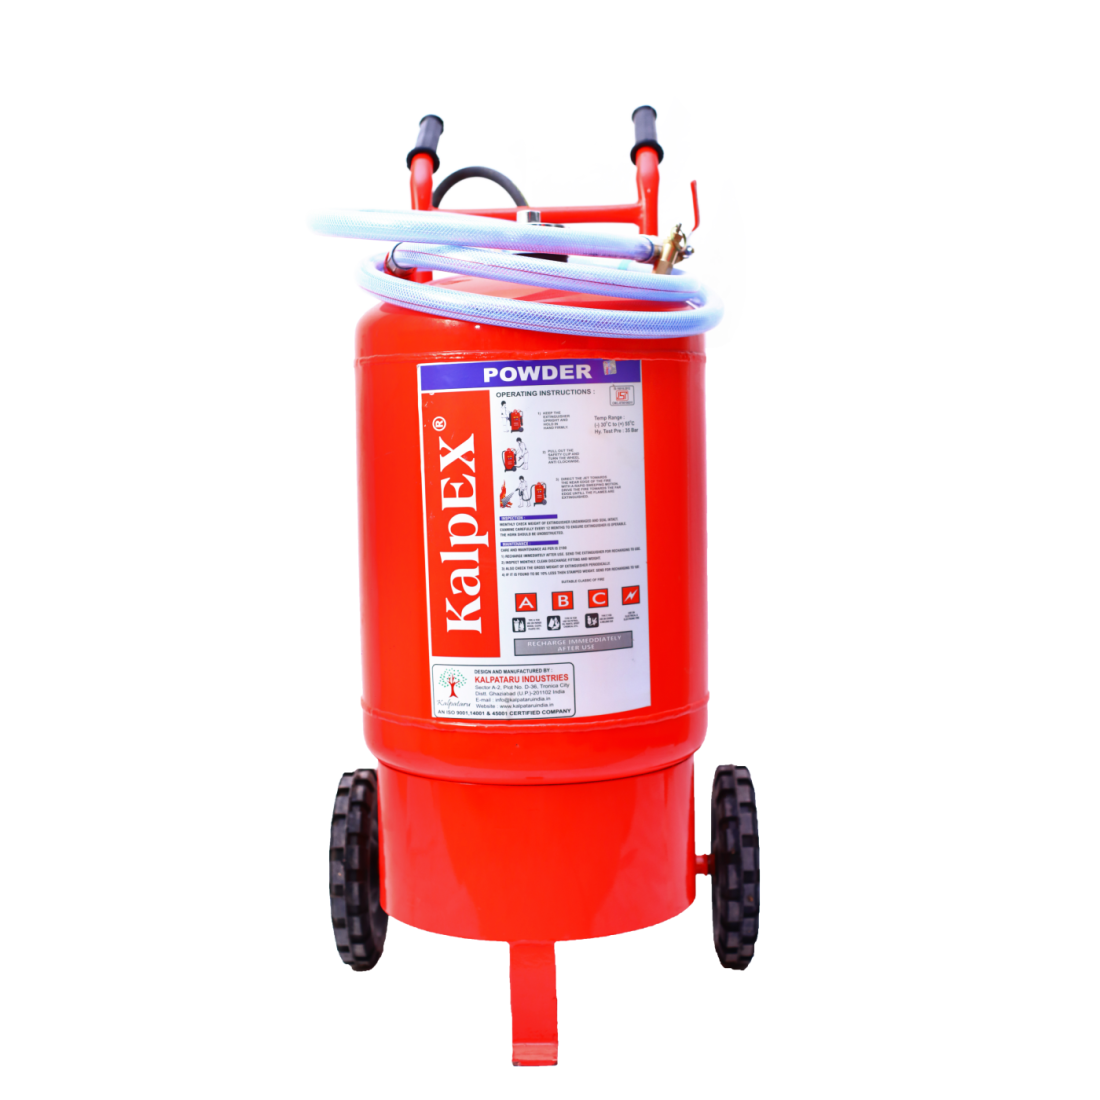 BC Powder Based Fire Extinguisher